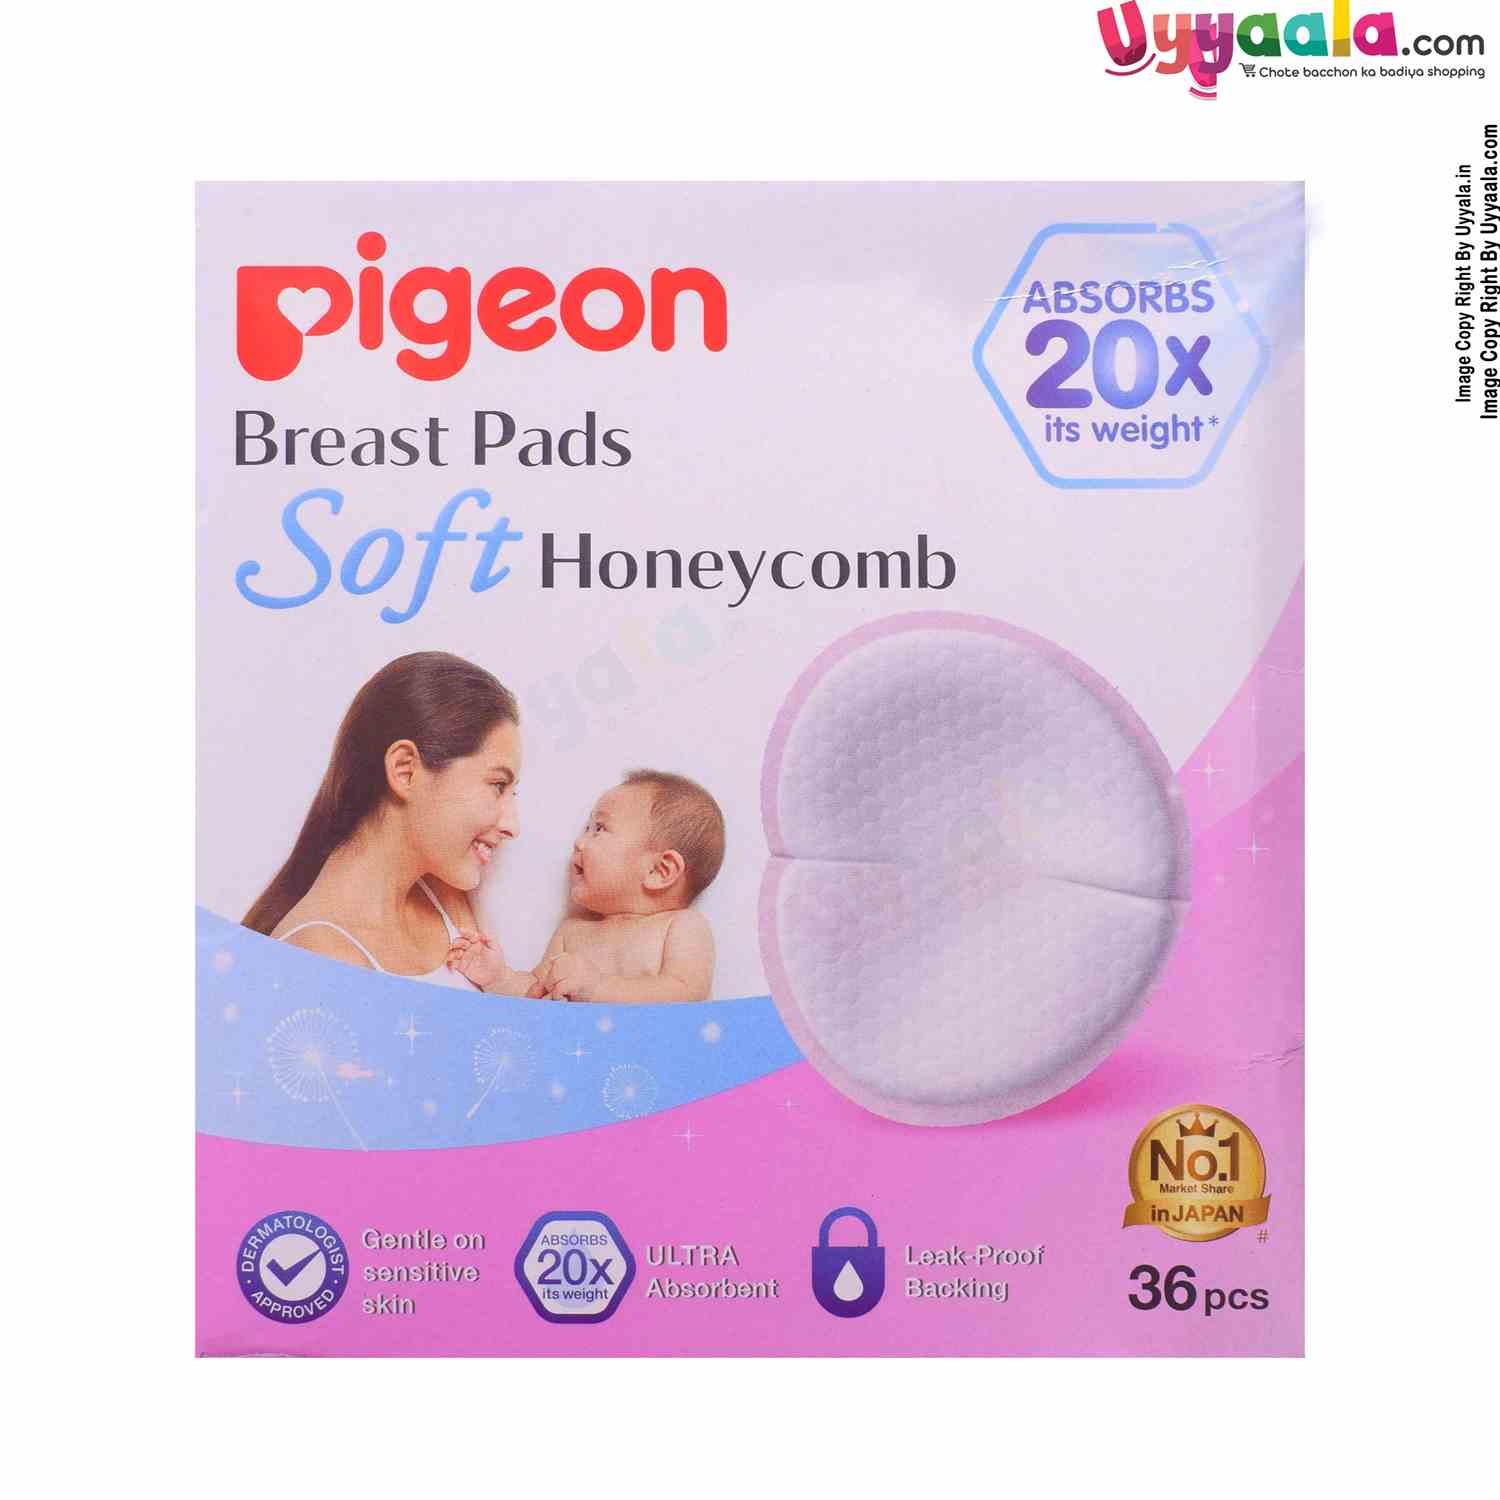 PIGEON Disposable Breast (Nursing) Pads Soft Honey Comb - 36pcs